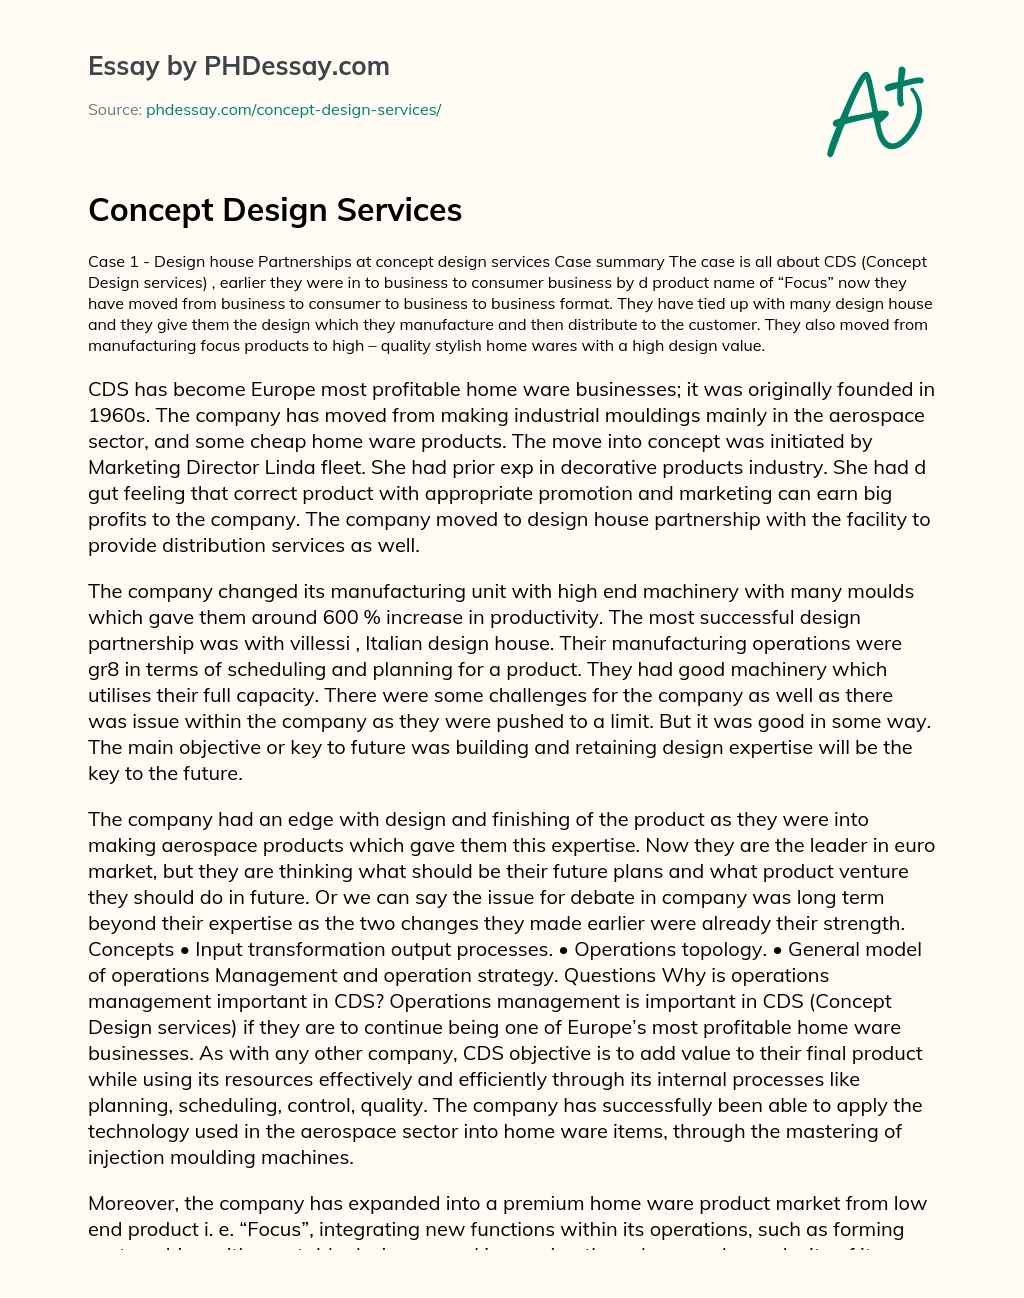 Concept Design Services essay